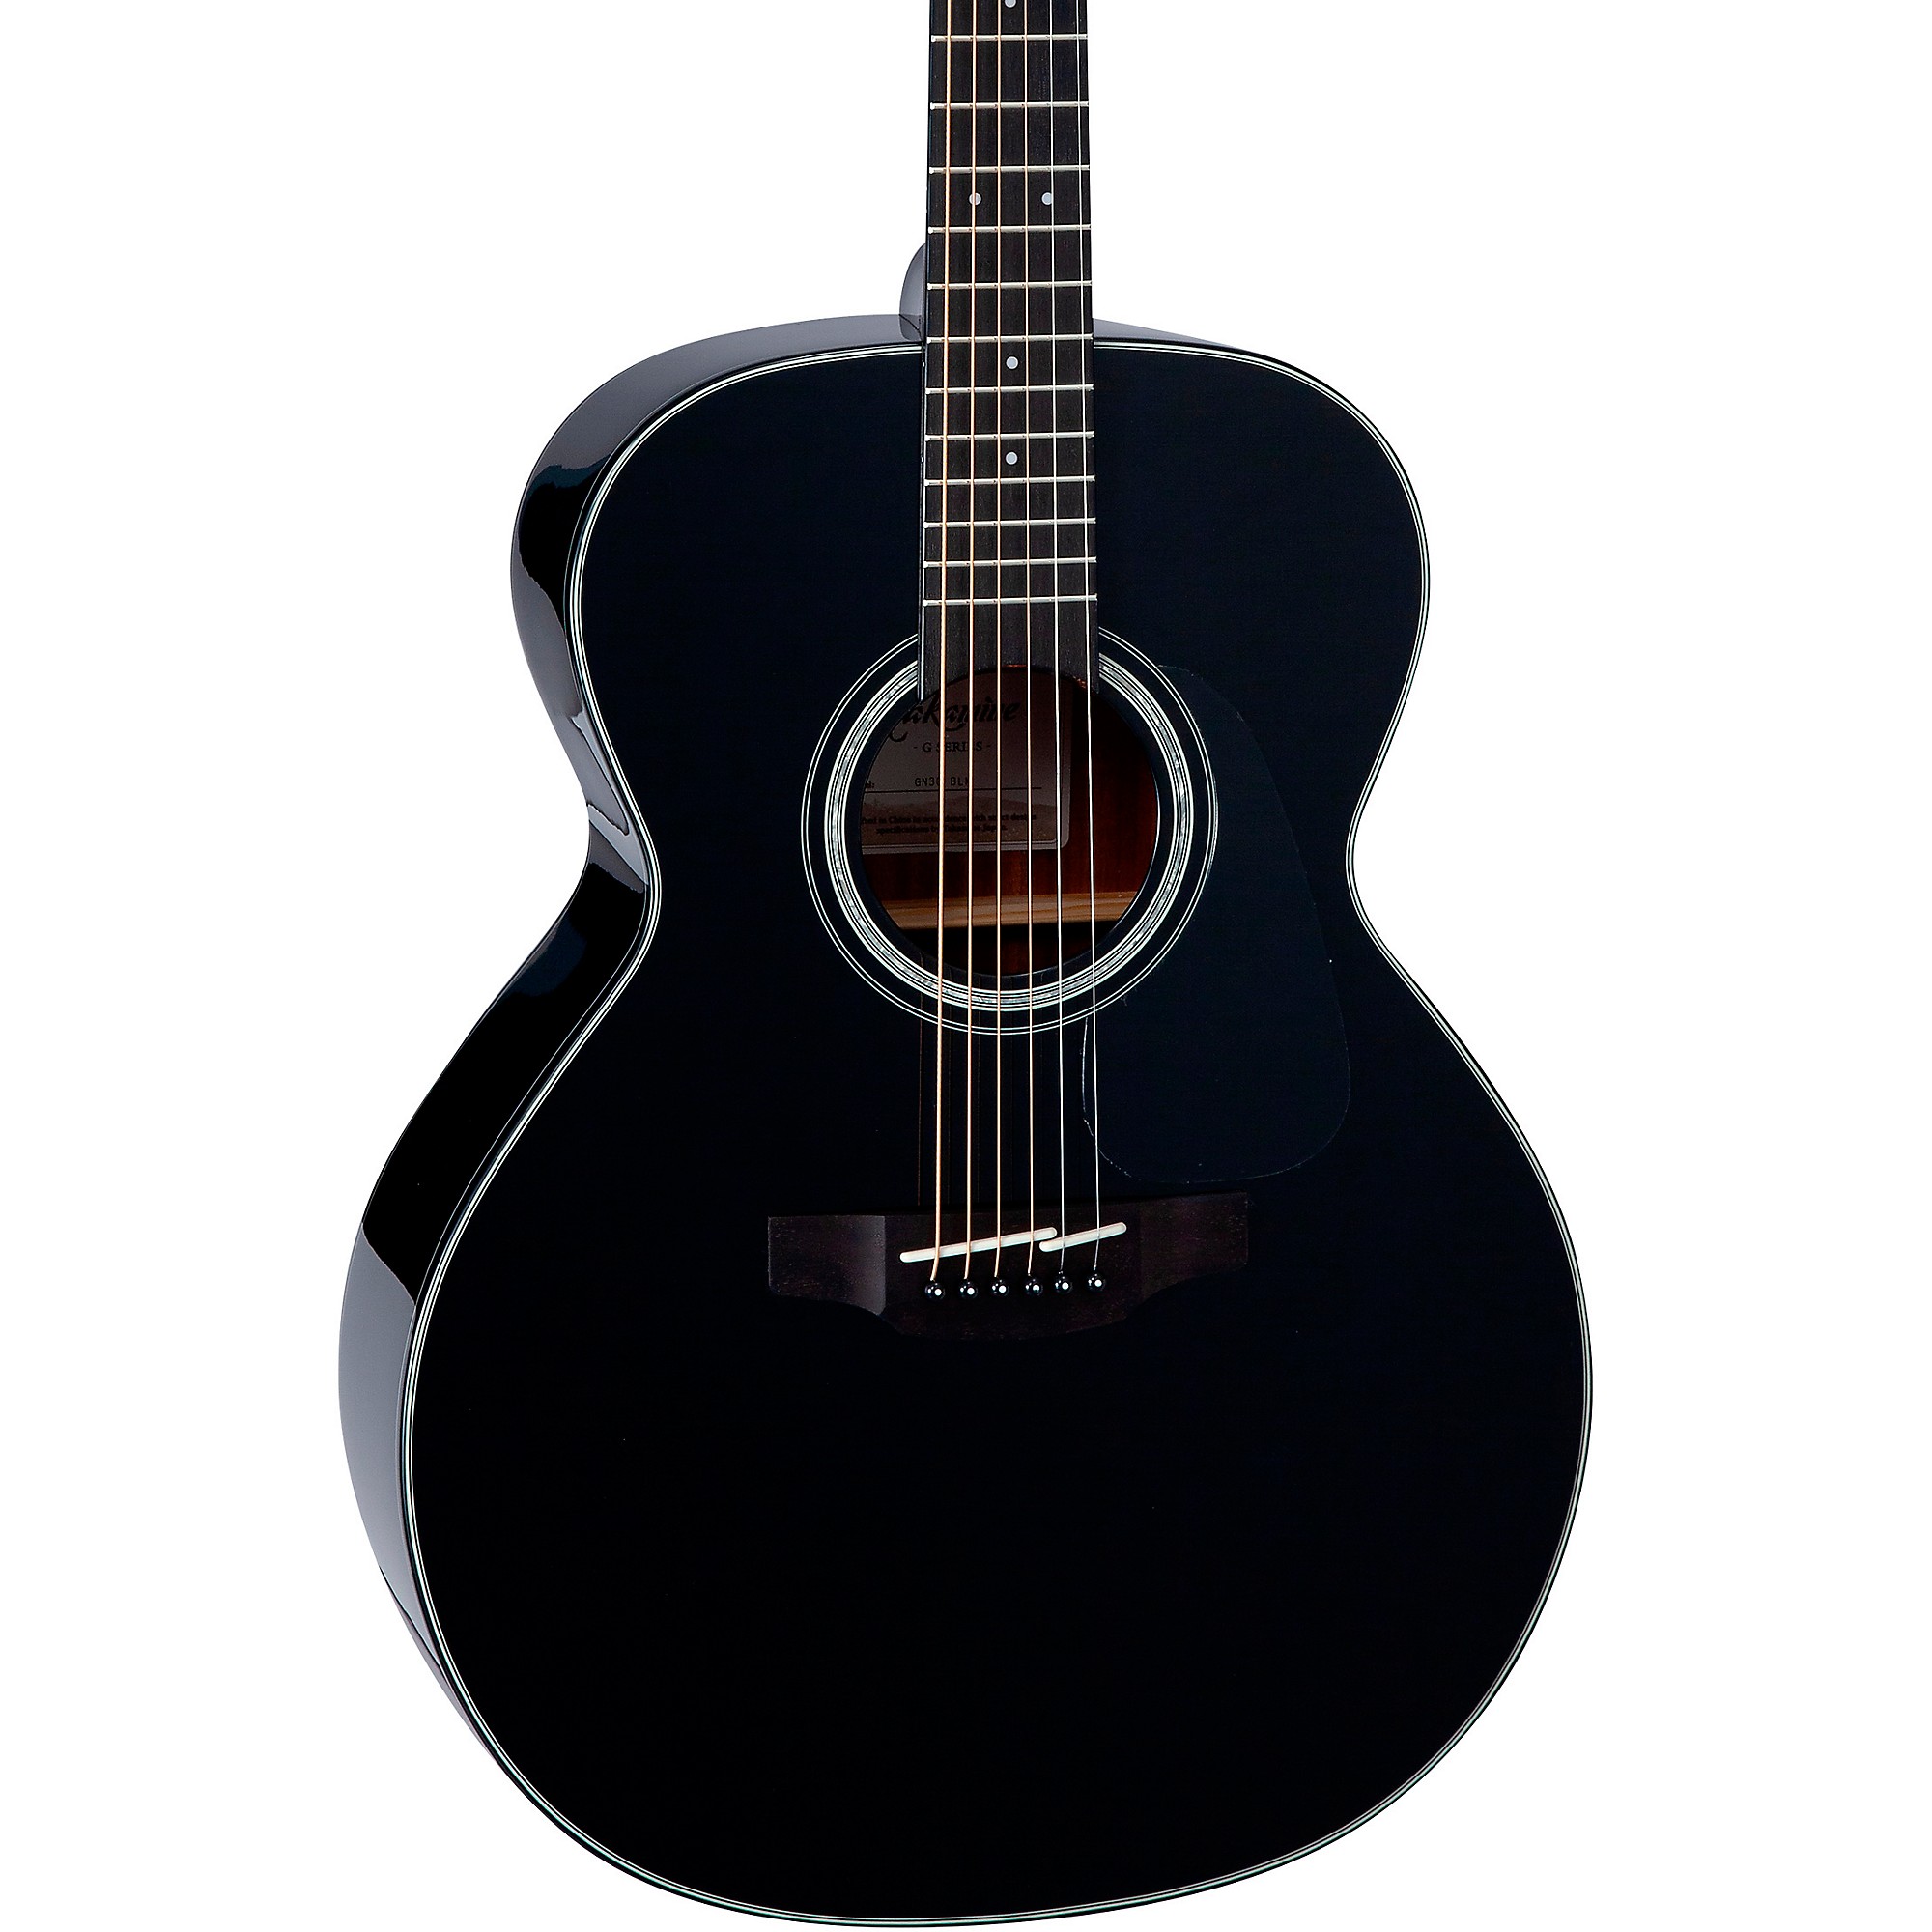 Акустическая гитара Takamine G Series GN30 NEX, глянцевая, черная акустическая гитара takamine g series gn30 nex acoustic guitar gloss natural package deal support small business